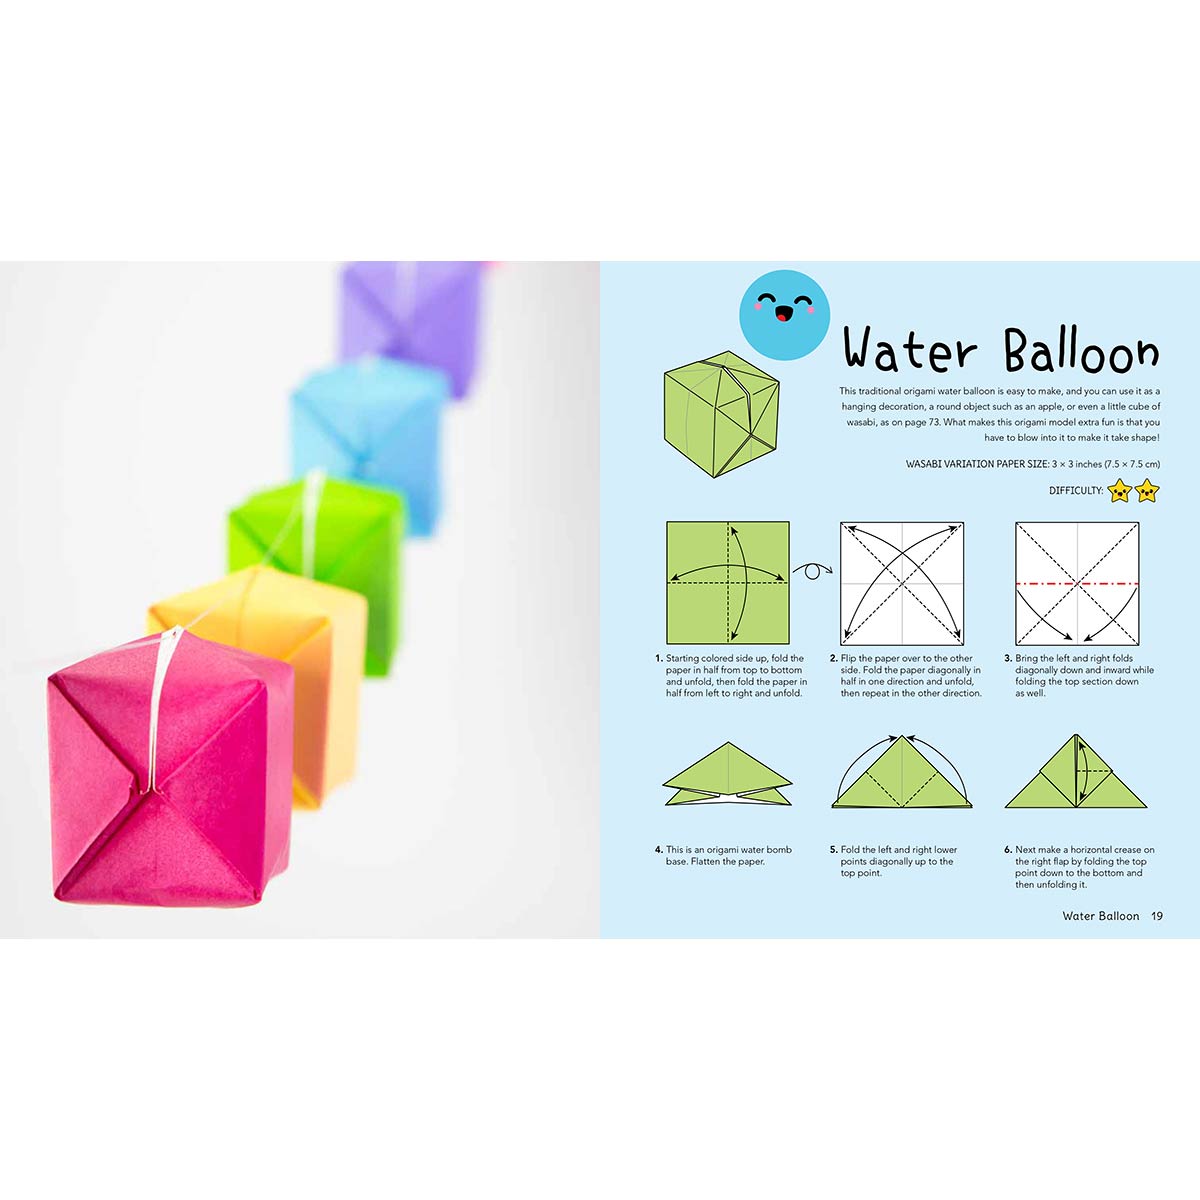 Walter Foster - Kawaii Origami Kit